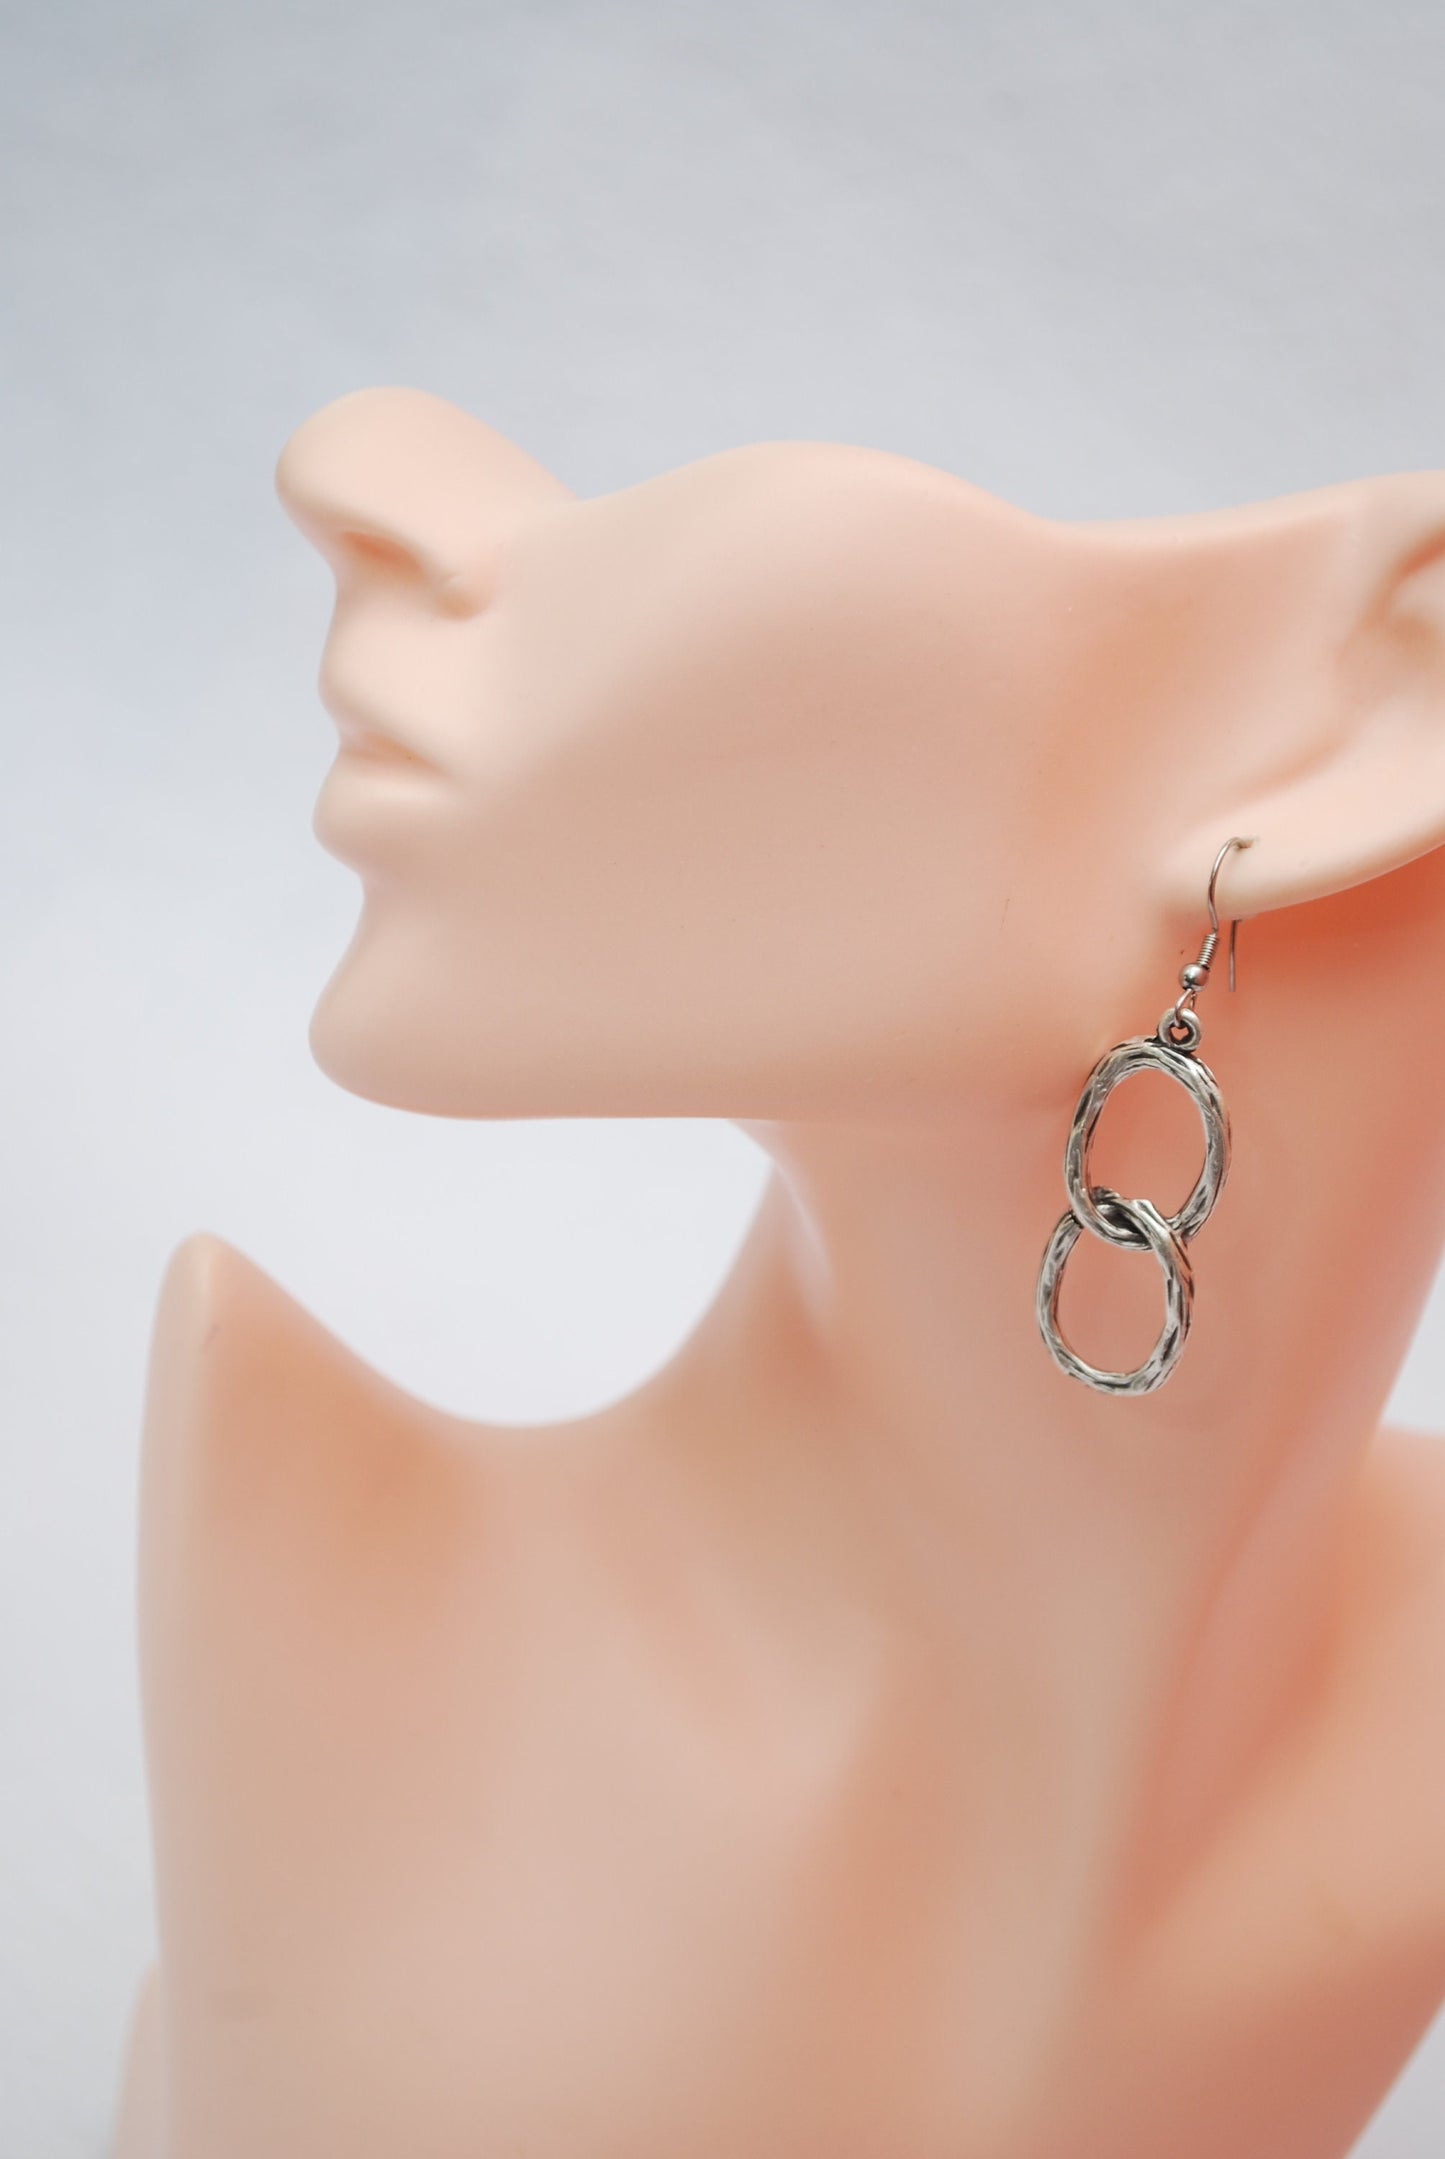 Big chain earrings, trendy drop earrings, silver plated earrings, casual outfit, girlfriend gift, 2" - 5.5cm